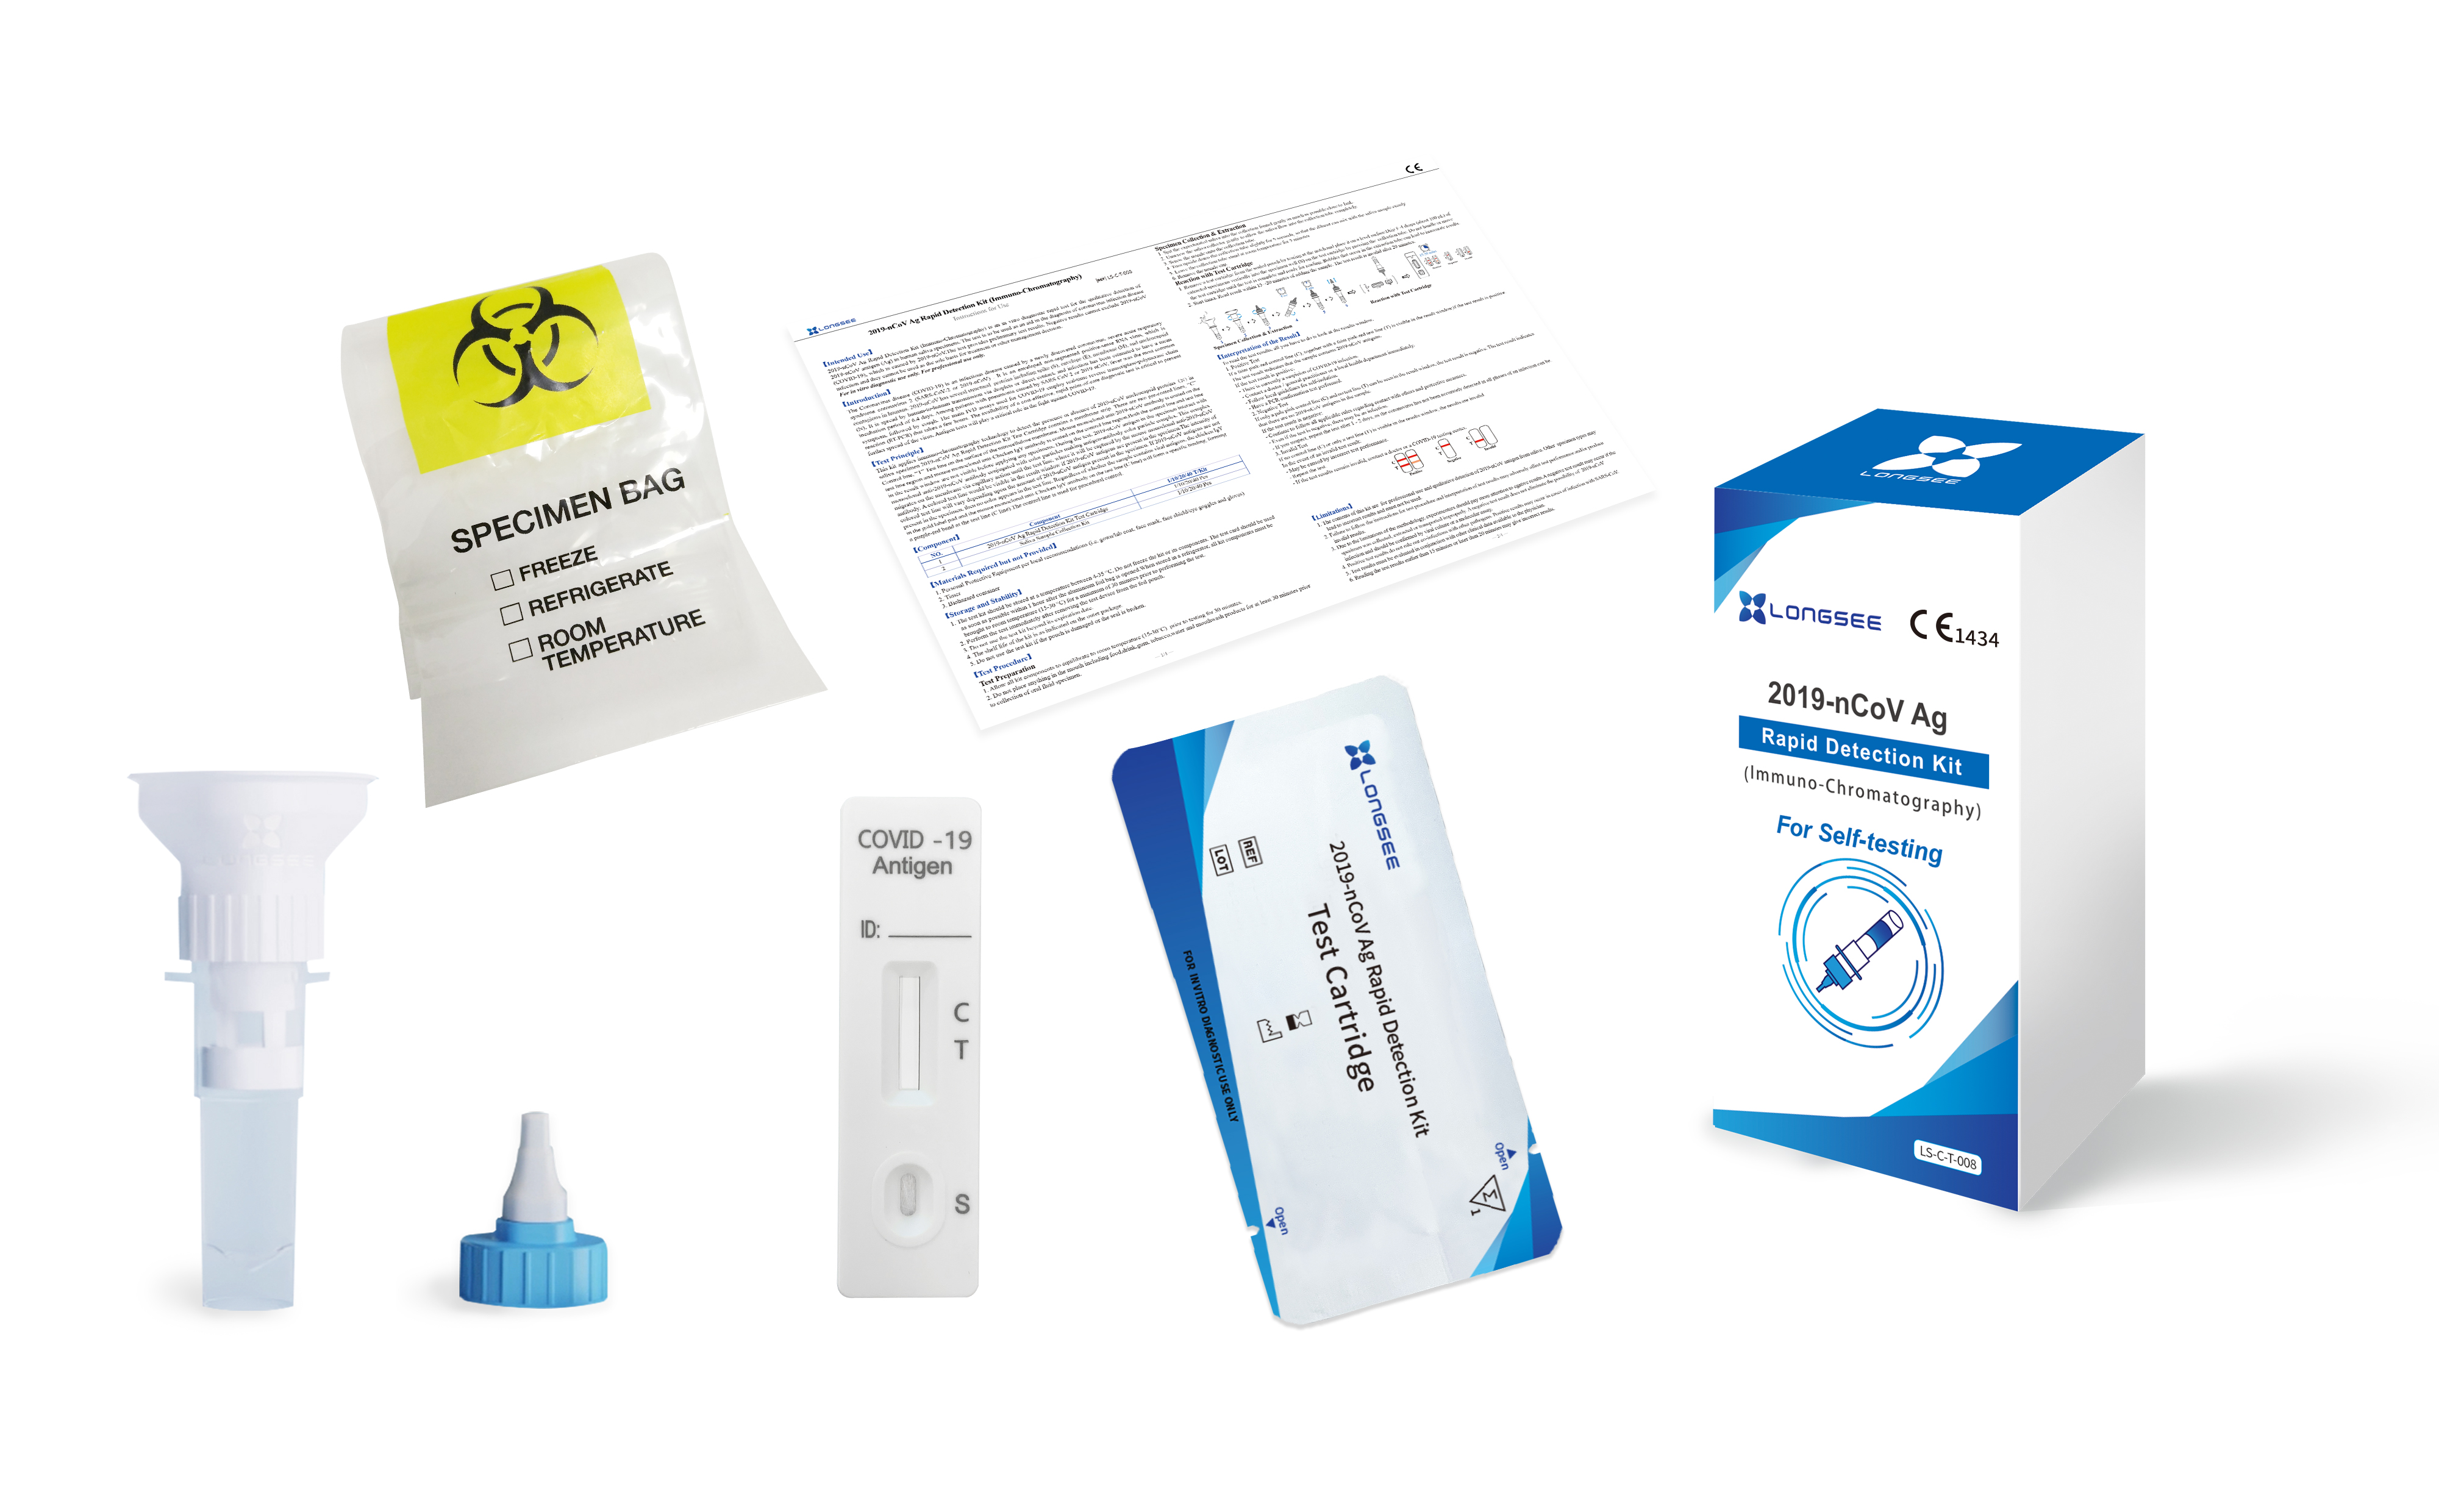 2019-nCoV Ag Rapid Detection Kit (Immuno-Chromatography)